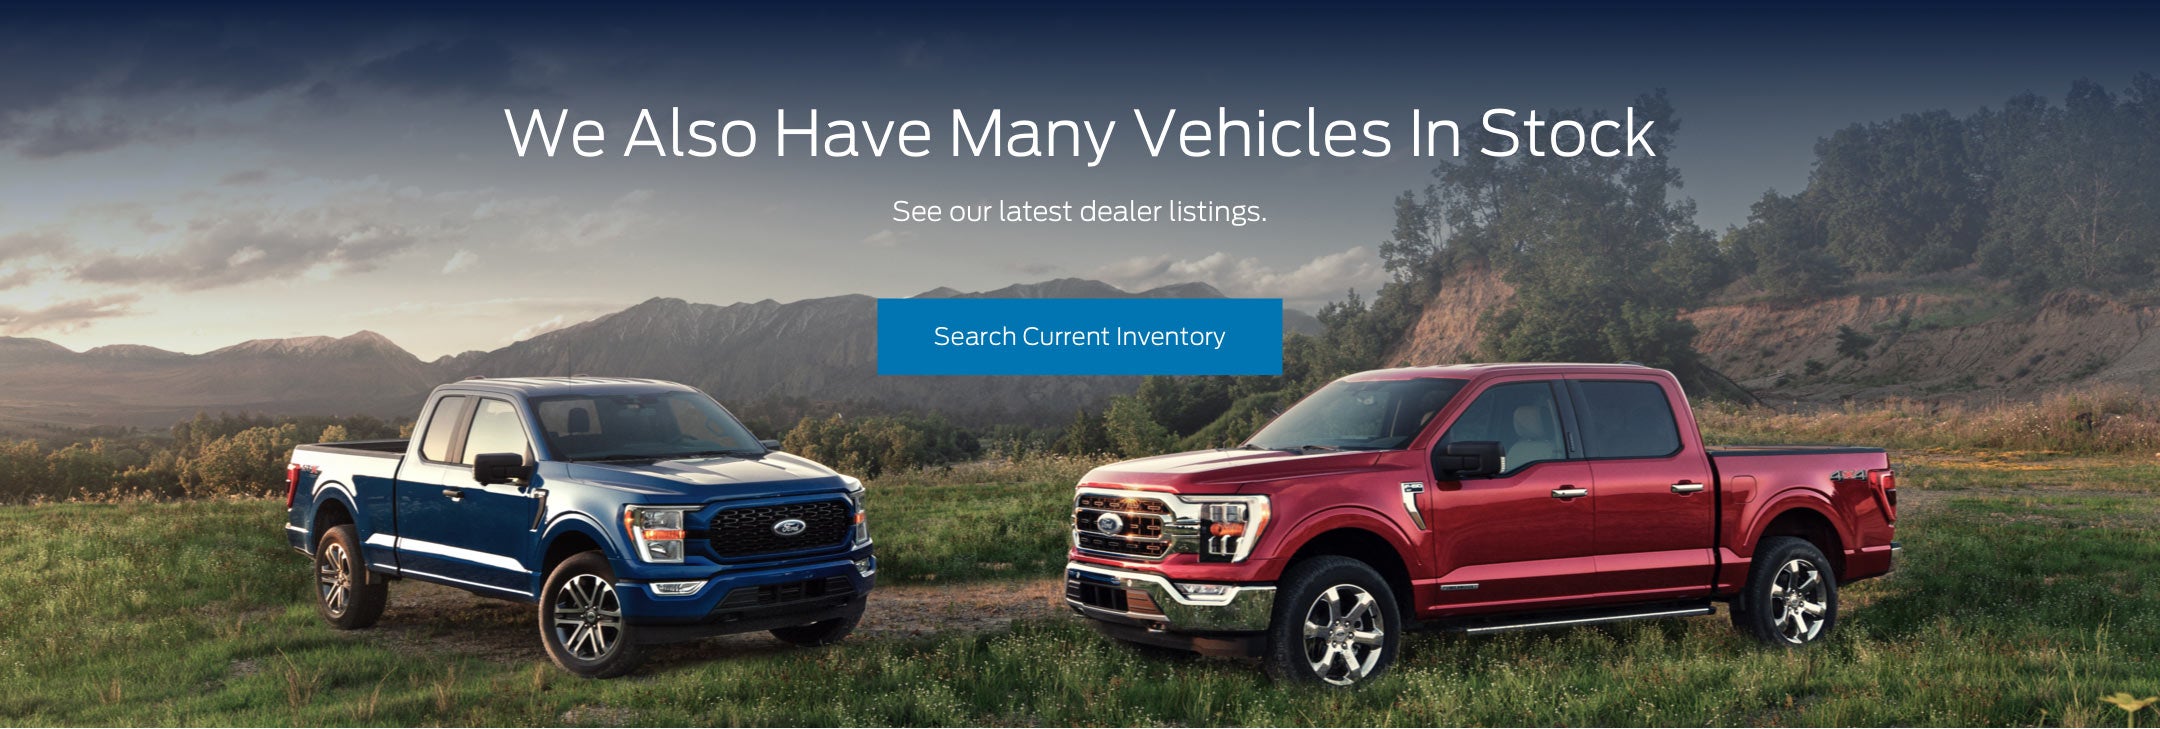 Ford vehicles in stock | Cavenaugh Ford in Jonesboro AR